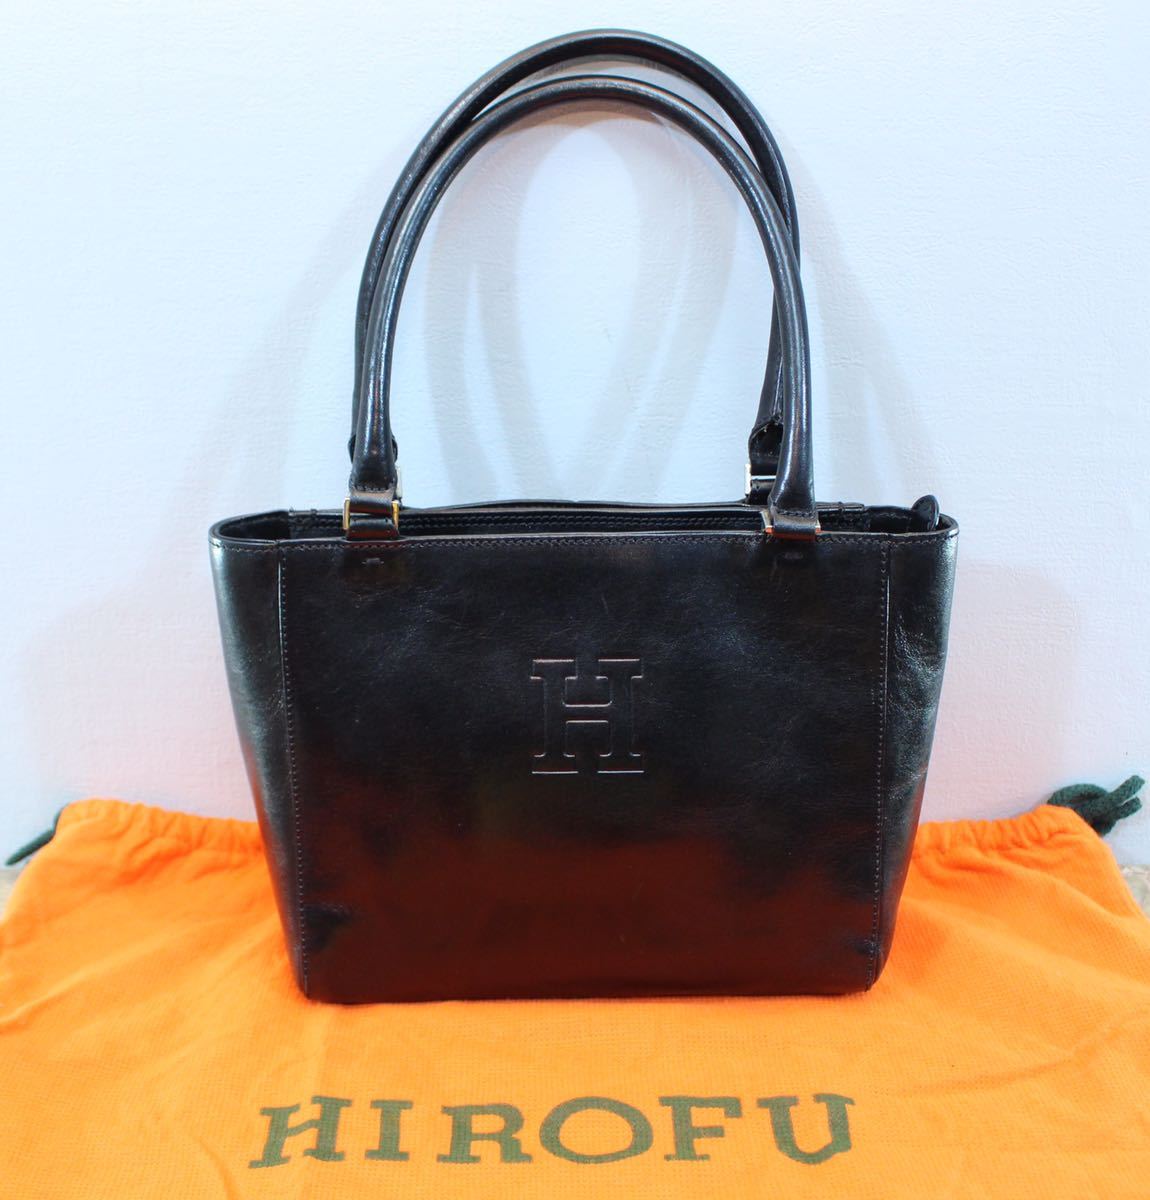 HIROFU H LOGO EMBOSSED LEATHER HAND BAG MADE IN ITALY/ヒロフロゴ型